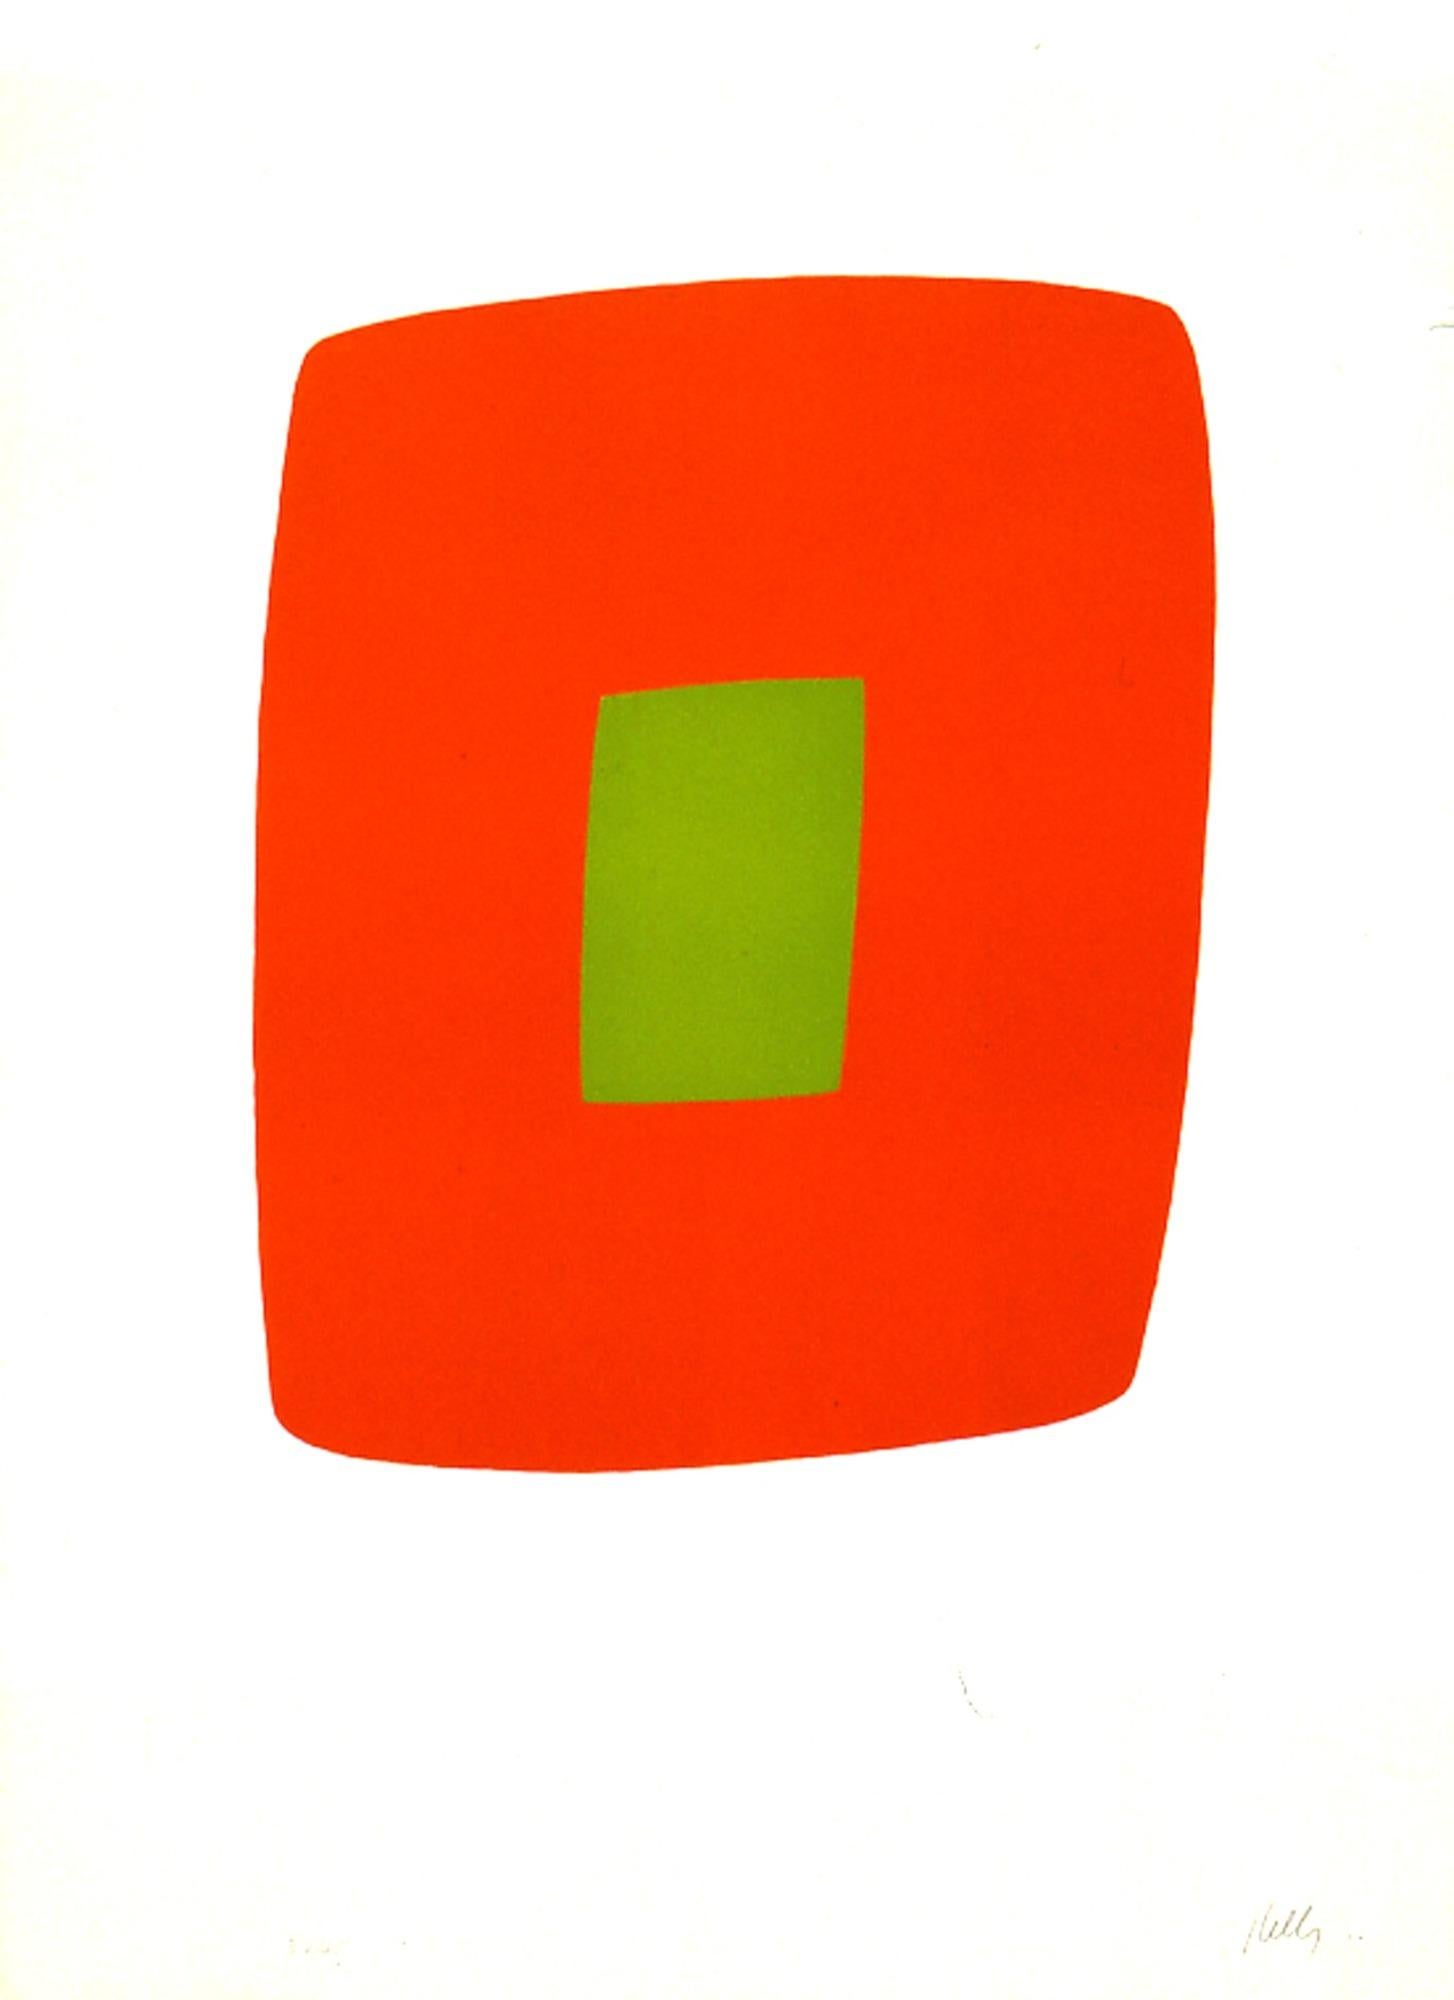 Orange with Green - Print by Ellsworth Kelly